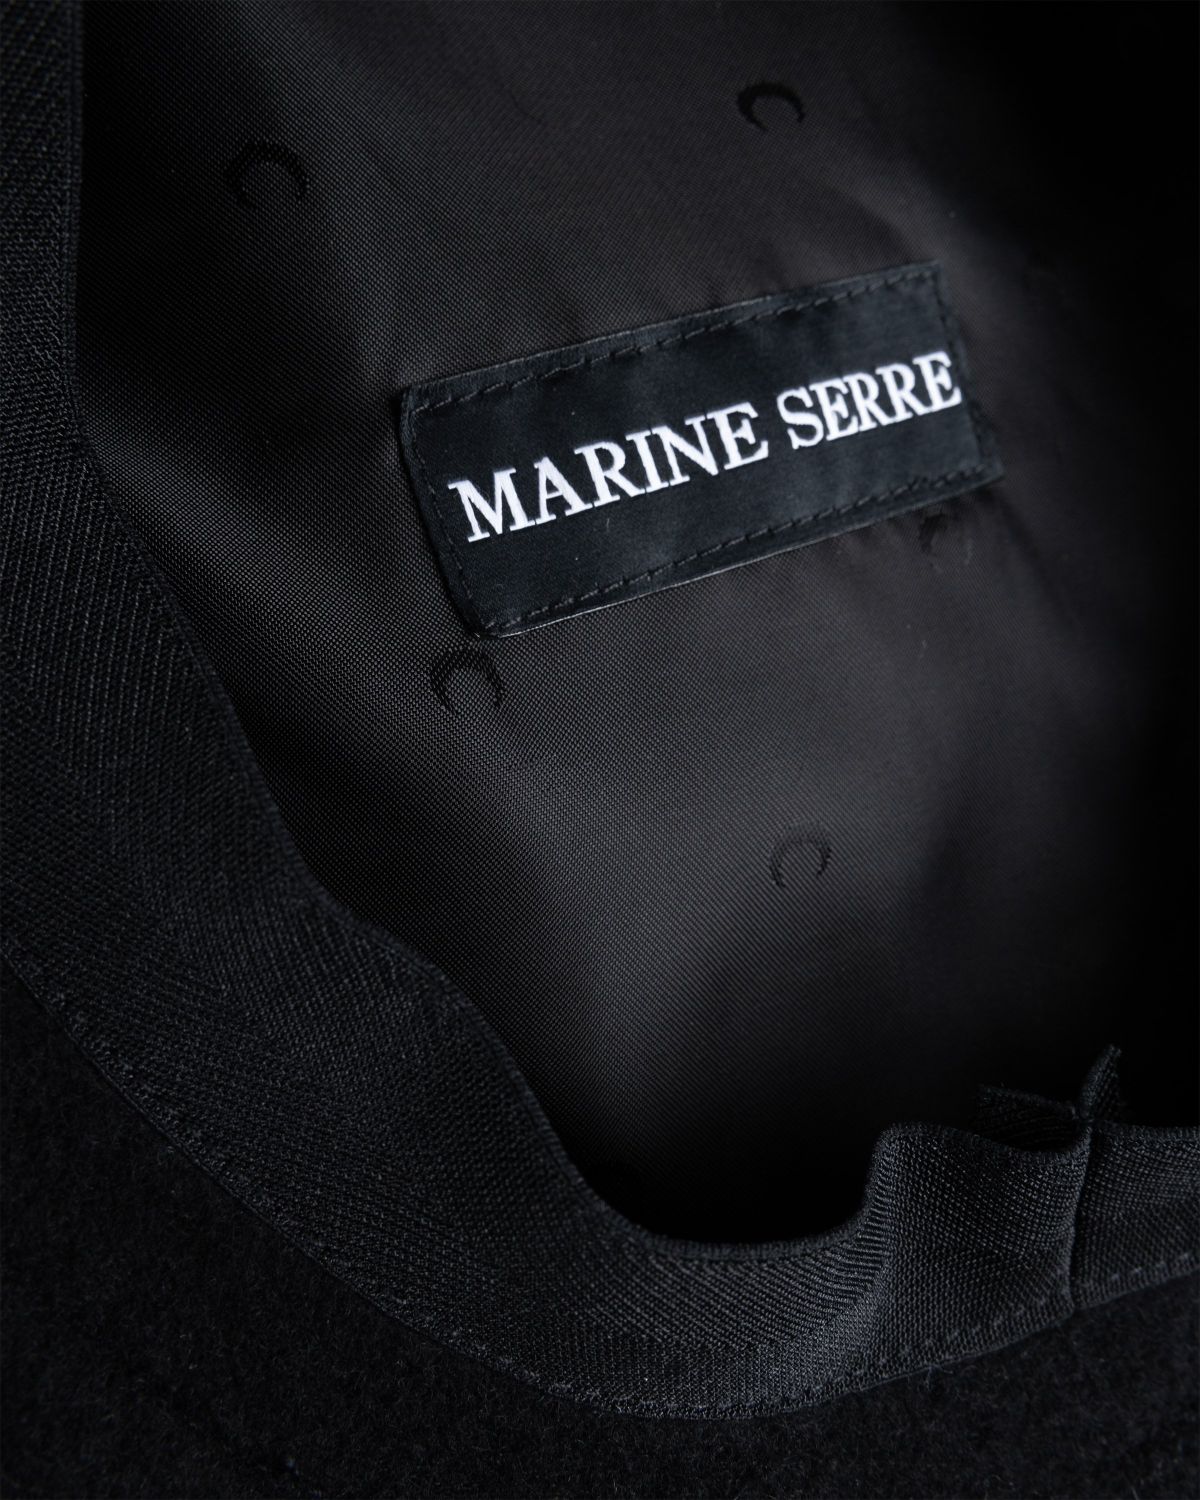 Marine Serre – Embroidered French Beret Black | Highsnobiety Shop